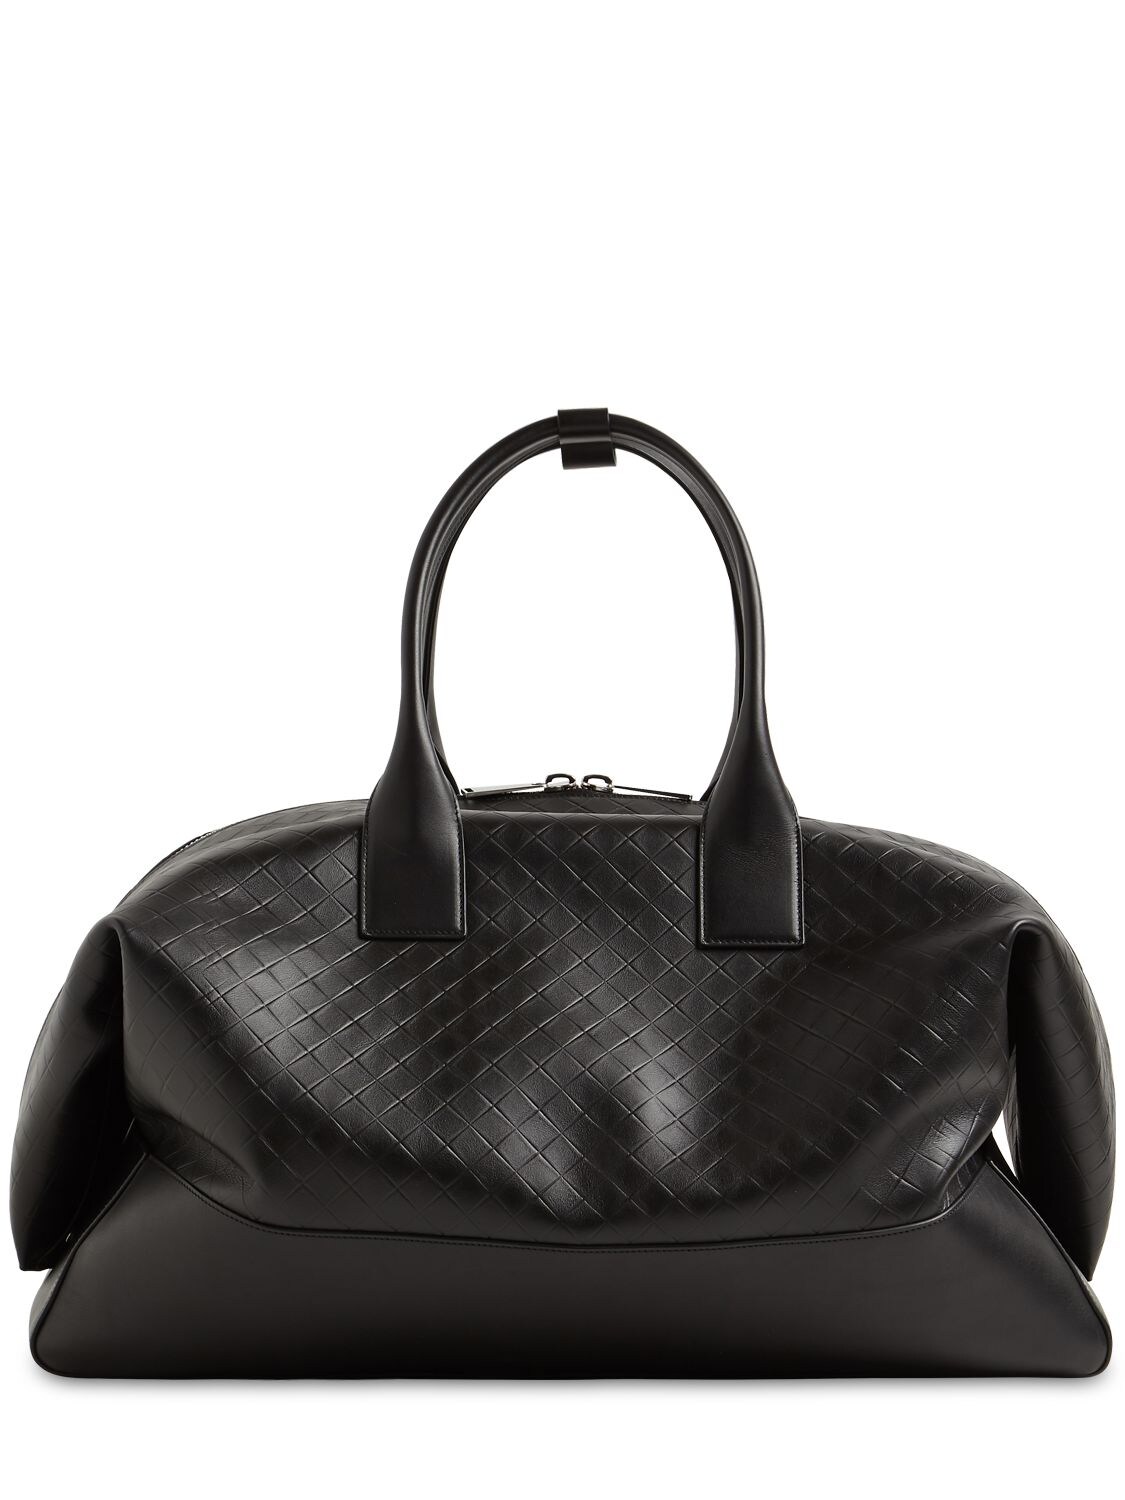 Bottega Veneta Embossed Leather Duffle Bag In Black